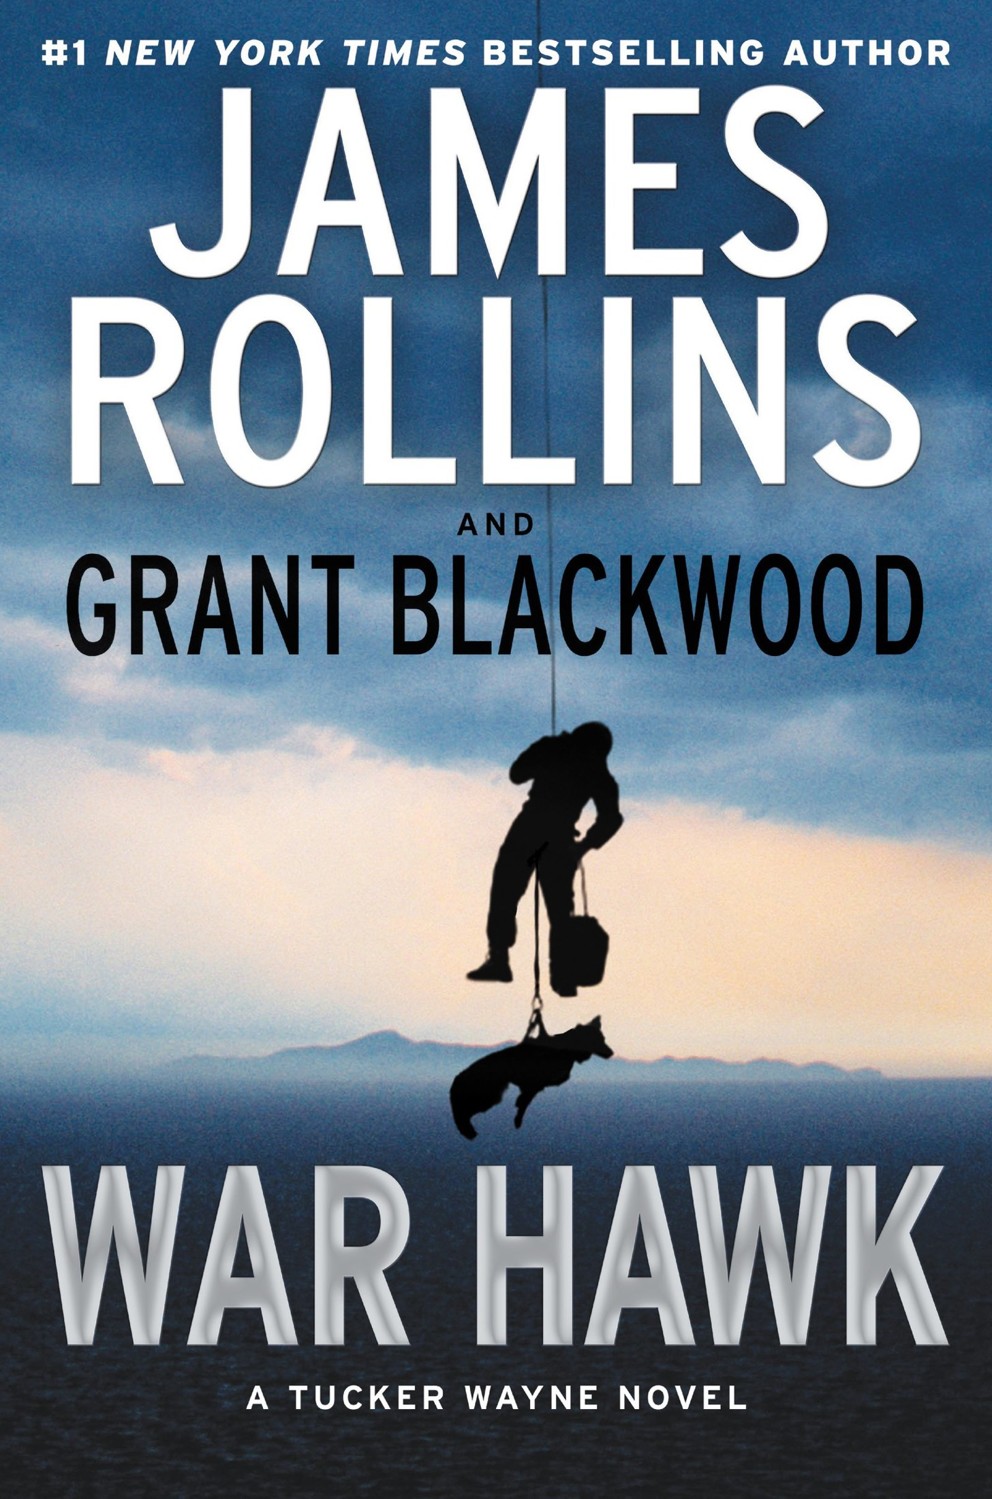 War Hawk: A Tucker Wayne Novel by James Rollins